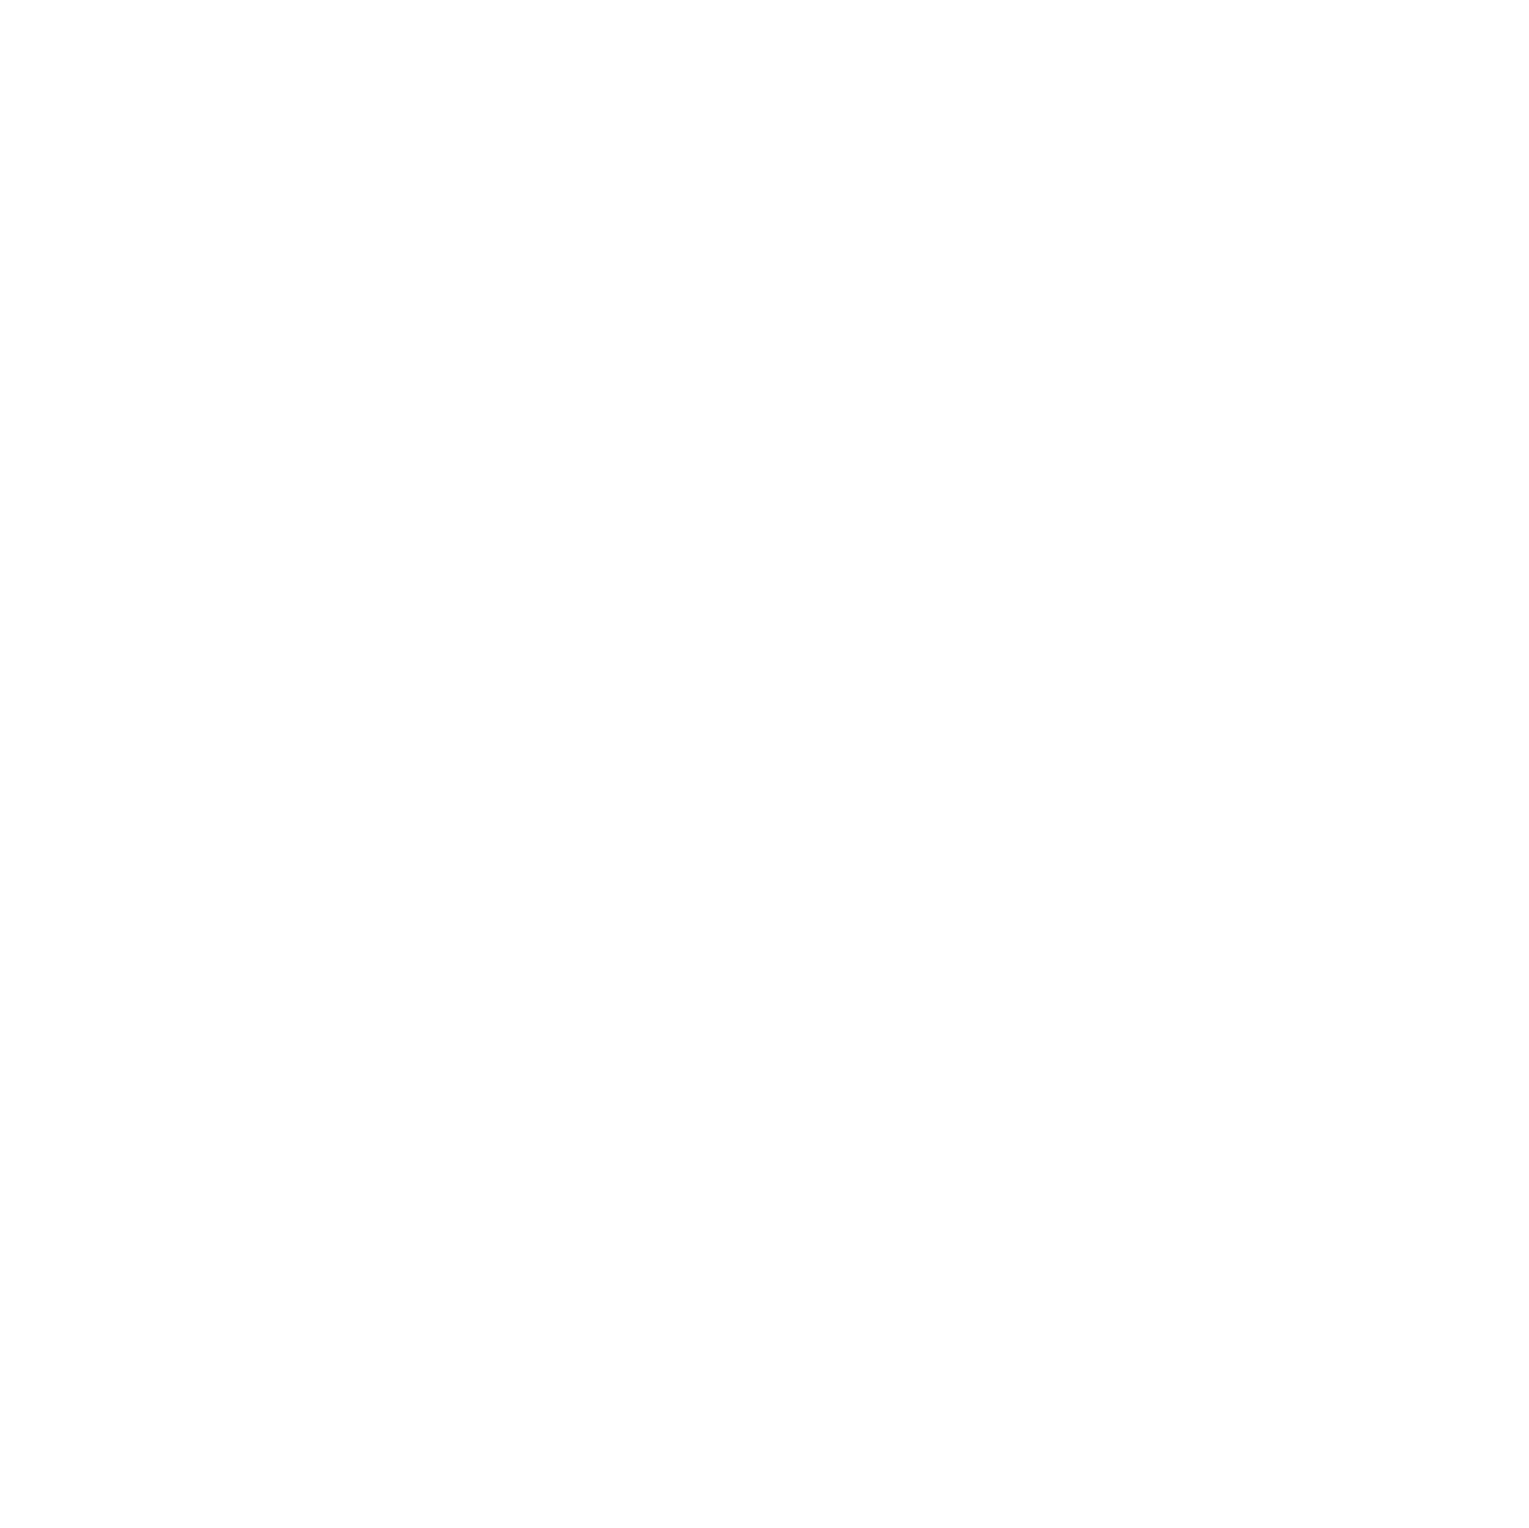 The Honest Company logo pour fonds sombres (PNG transparent)